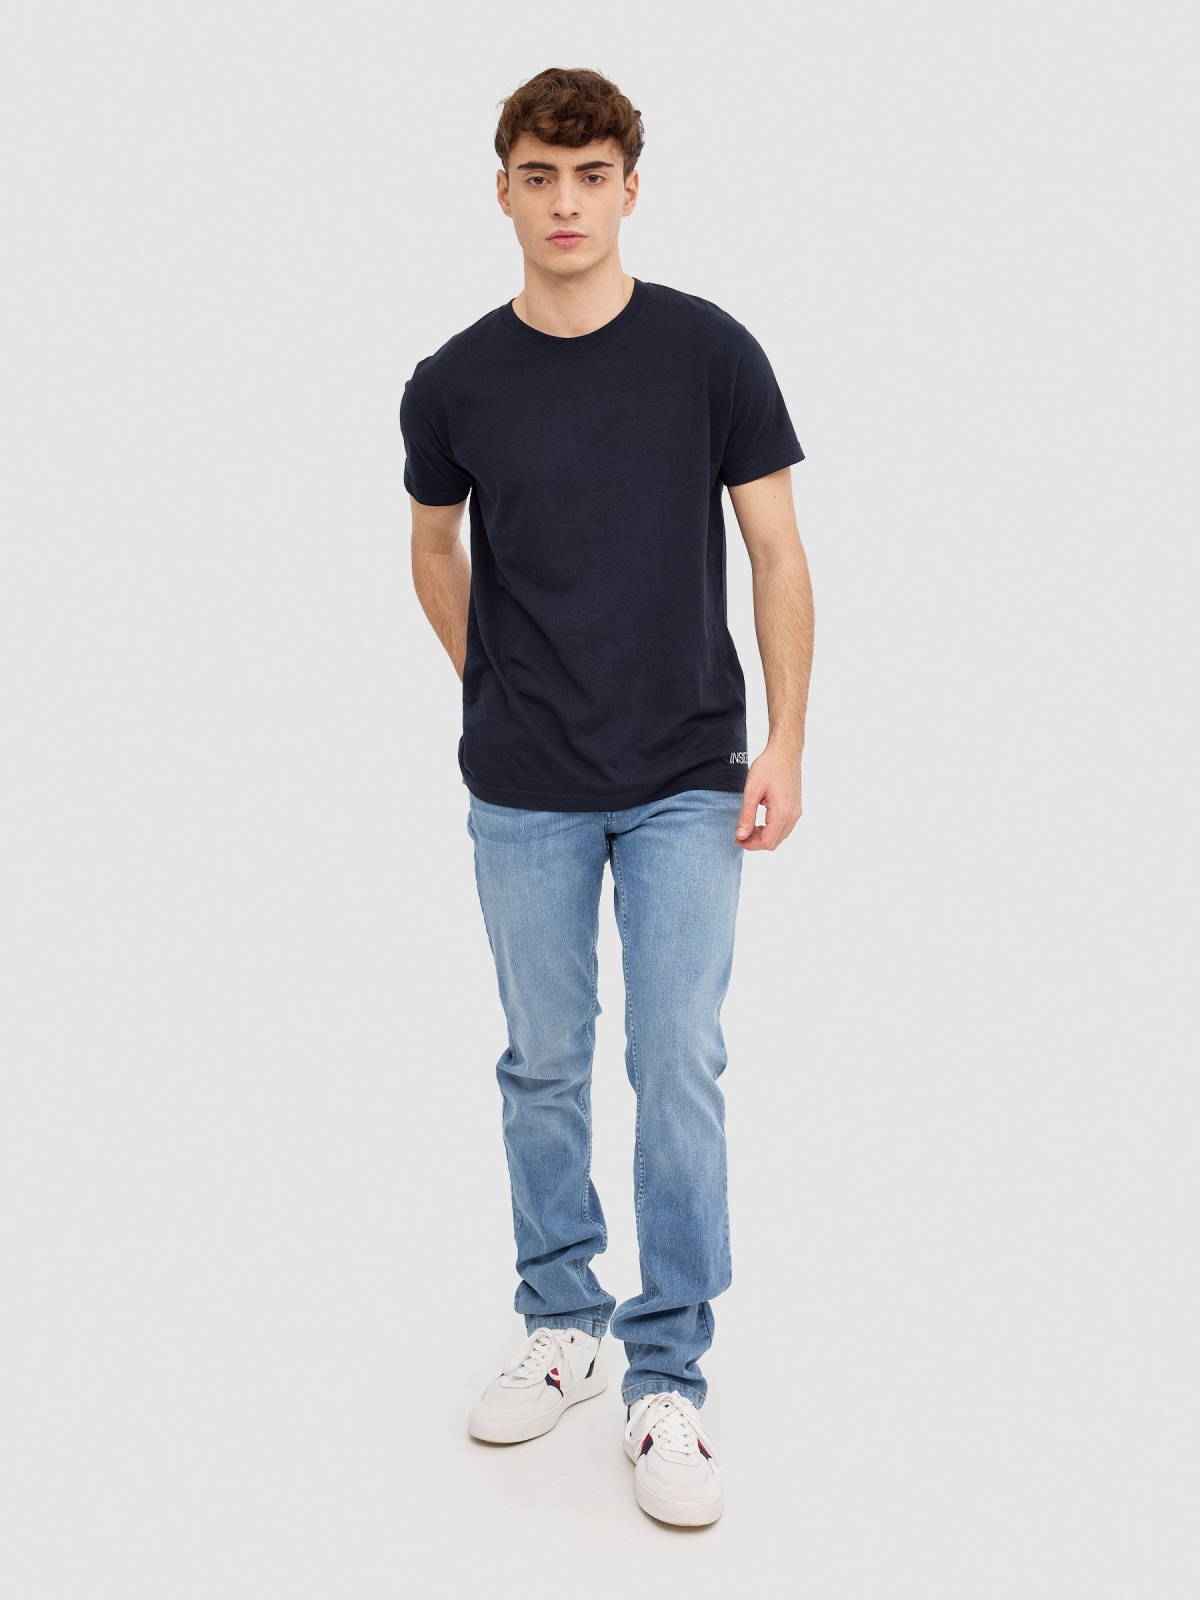 Jeans slim fit azul claro uniforme azul vista geral frontal